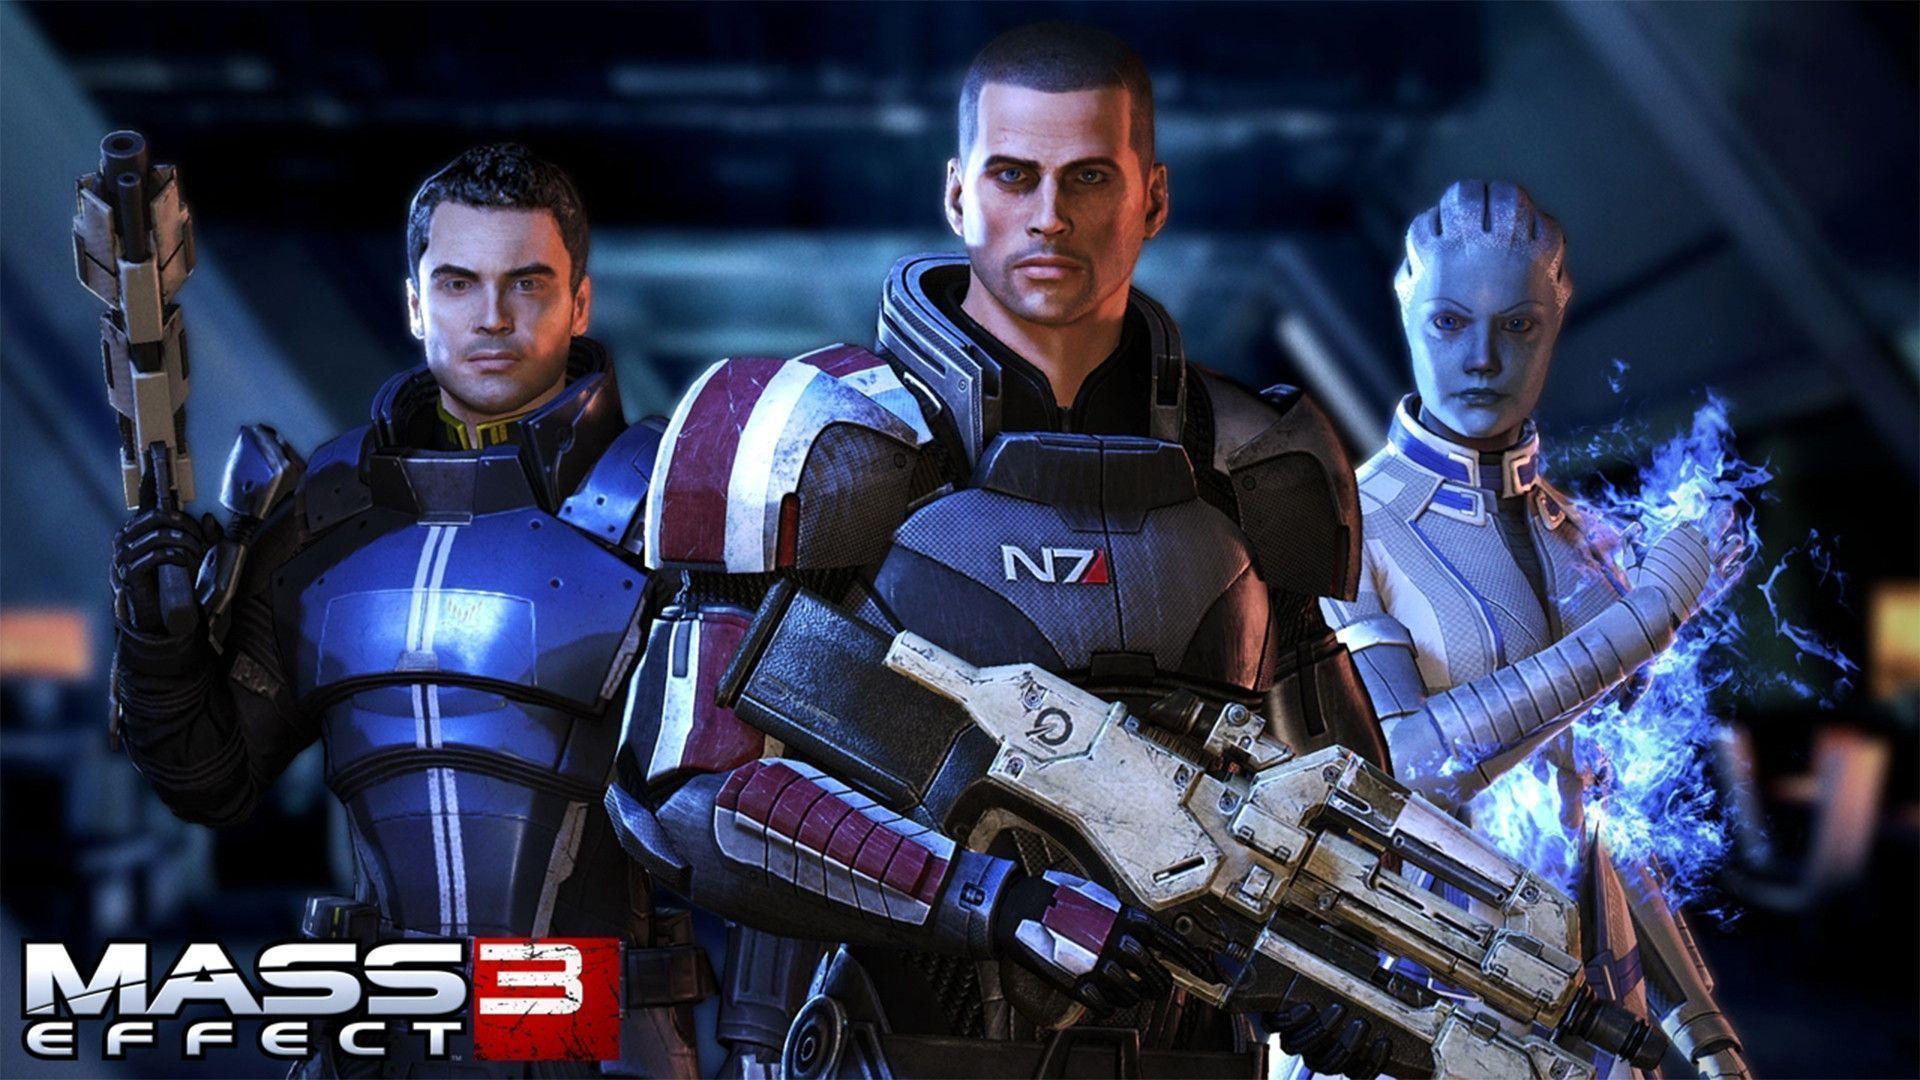 Mass Effect 3 Desktop Wallpaper FREE on Latoro.com